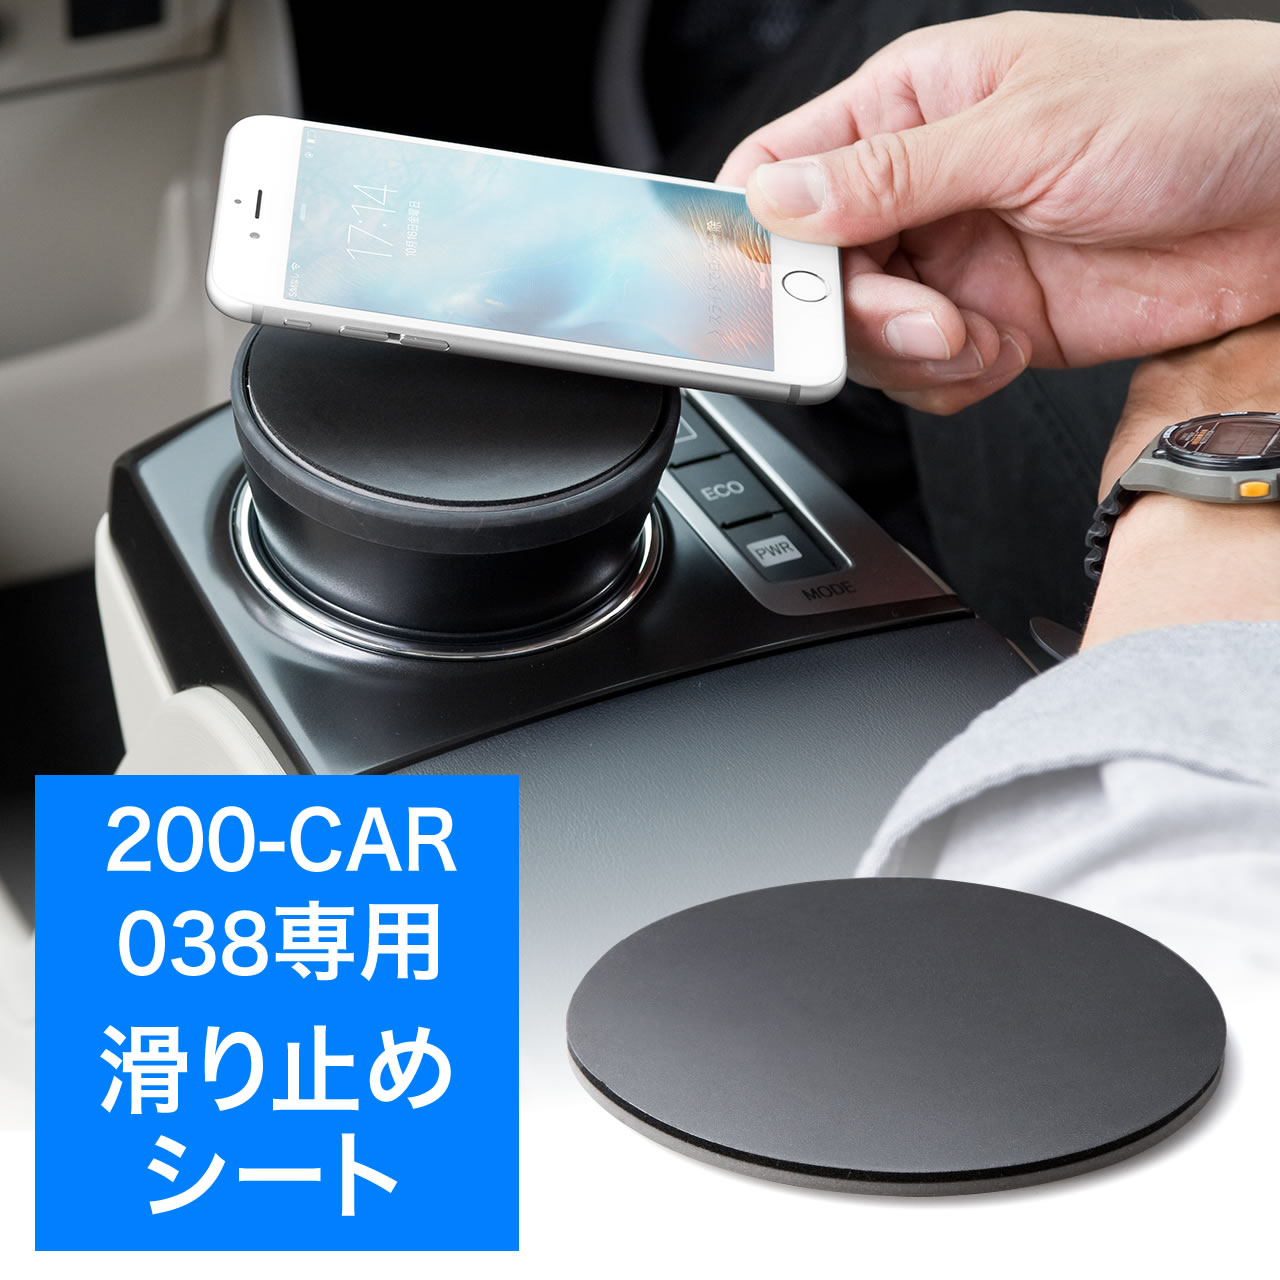 200 Car038専用すべり止めシート スマートフォンホルダー Iphone スマートキー対応 車載 日本製 200 Car038nsの販売商品 通販ならサンワダイレクト